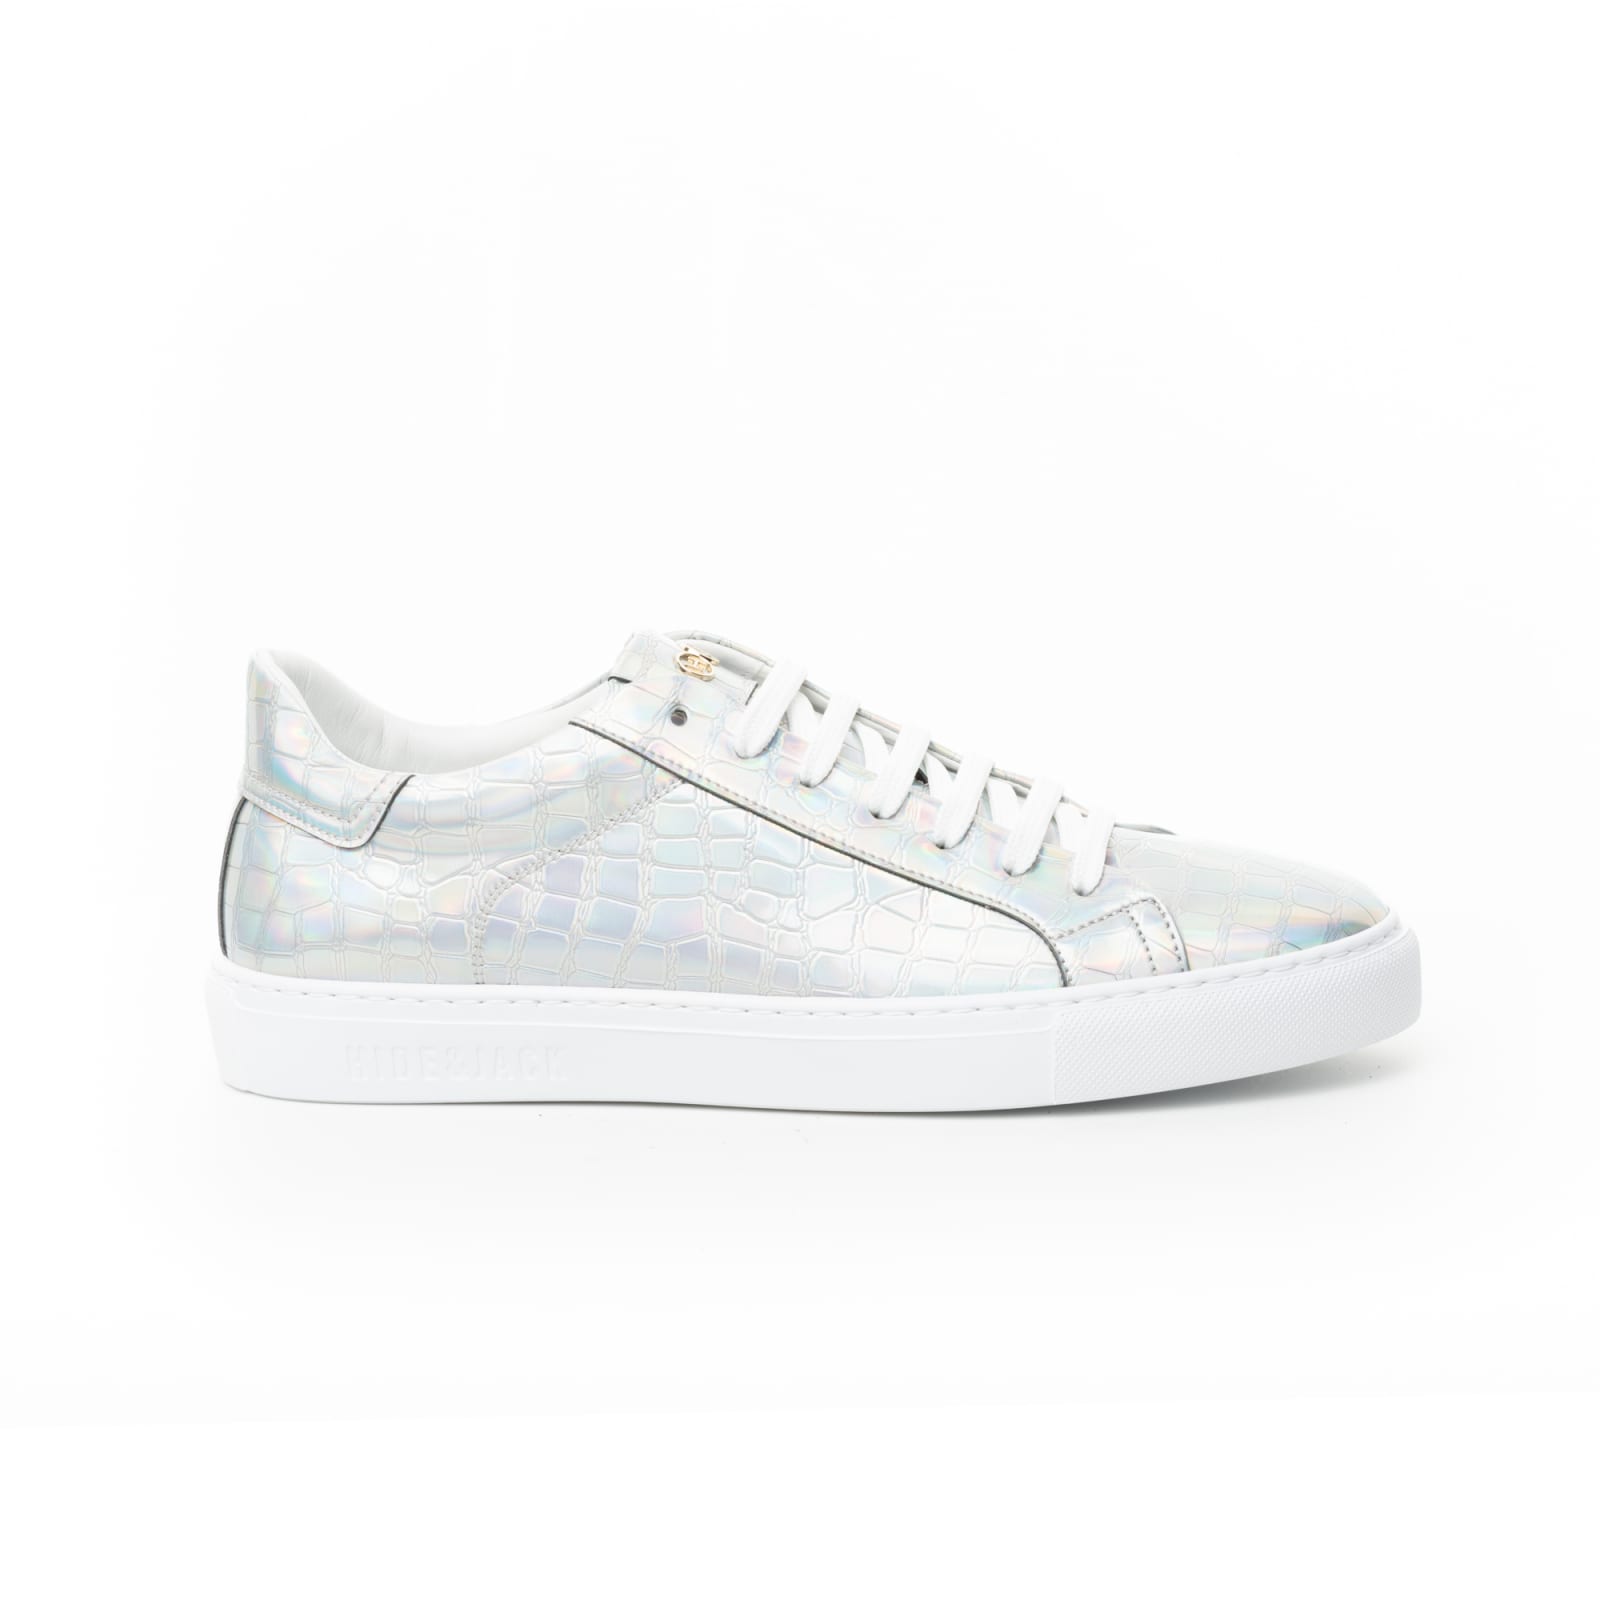 Hide & Jack Low Top Sneaker - Essence Glamour Silver White